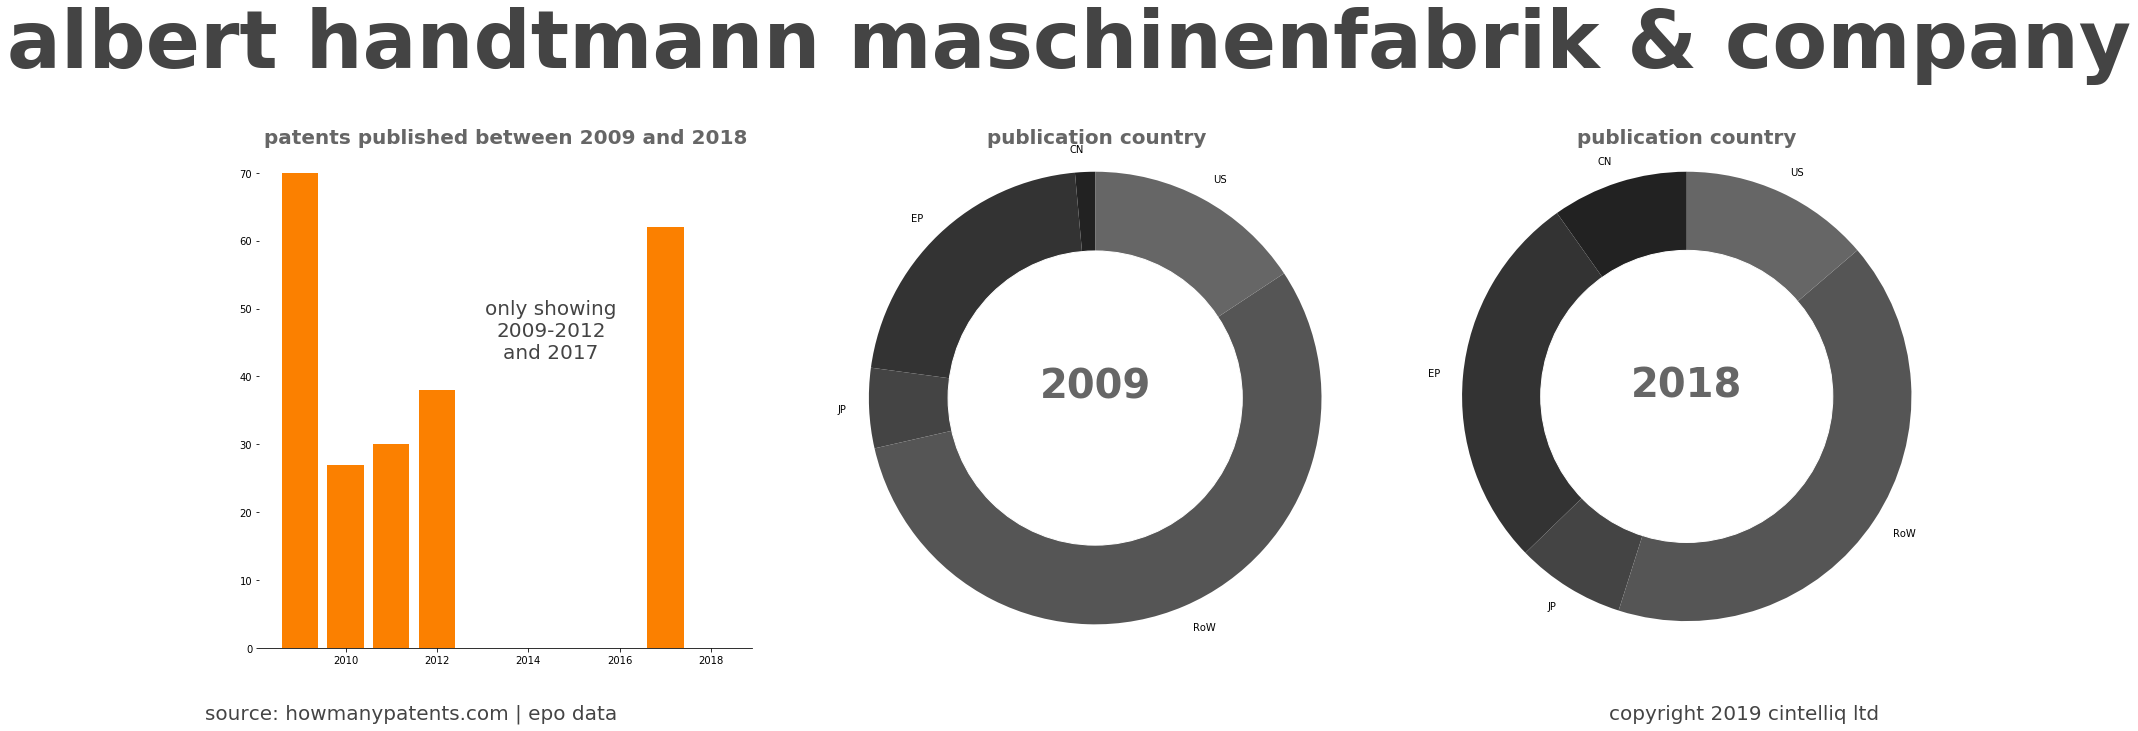 summary of patents for Albert Handtmann Maschinenfabrik & Company